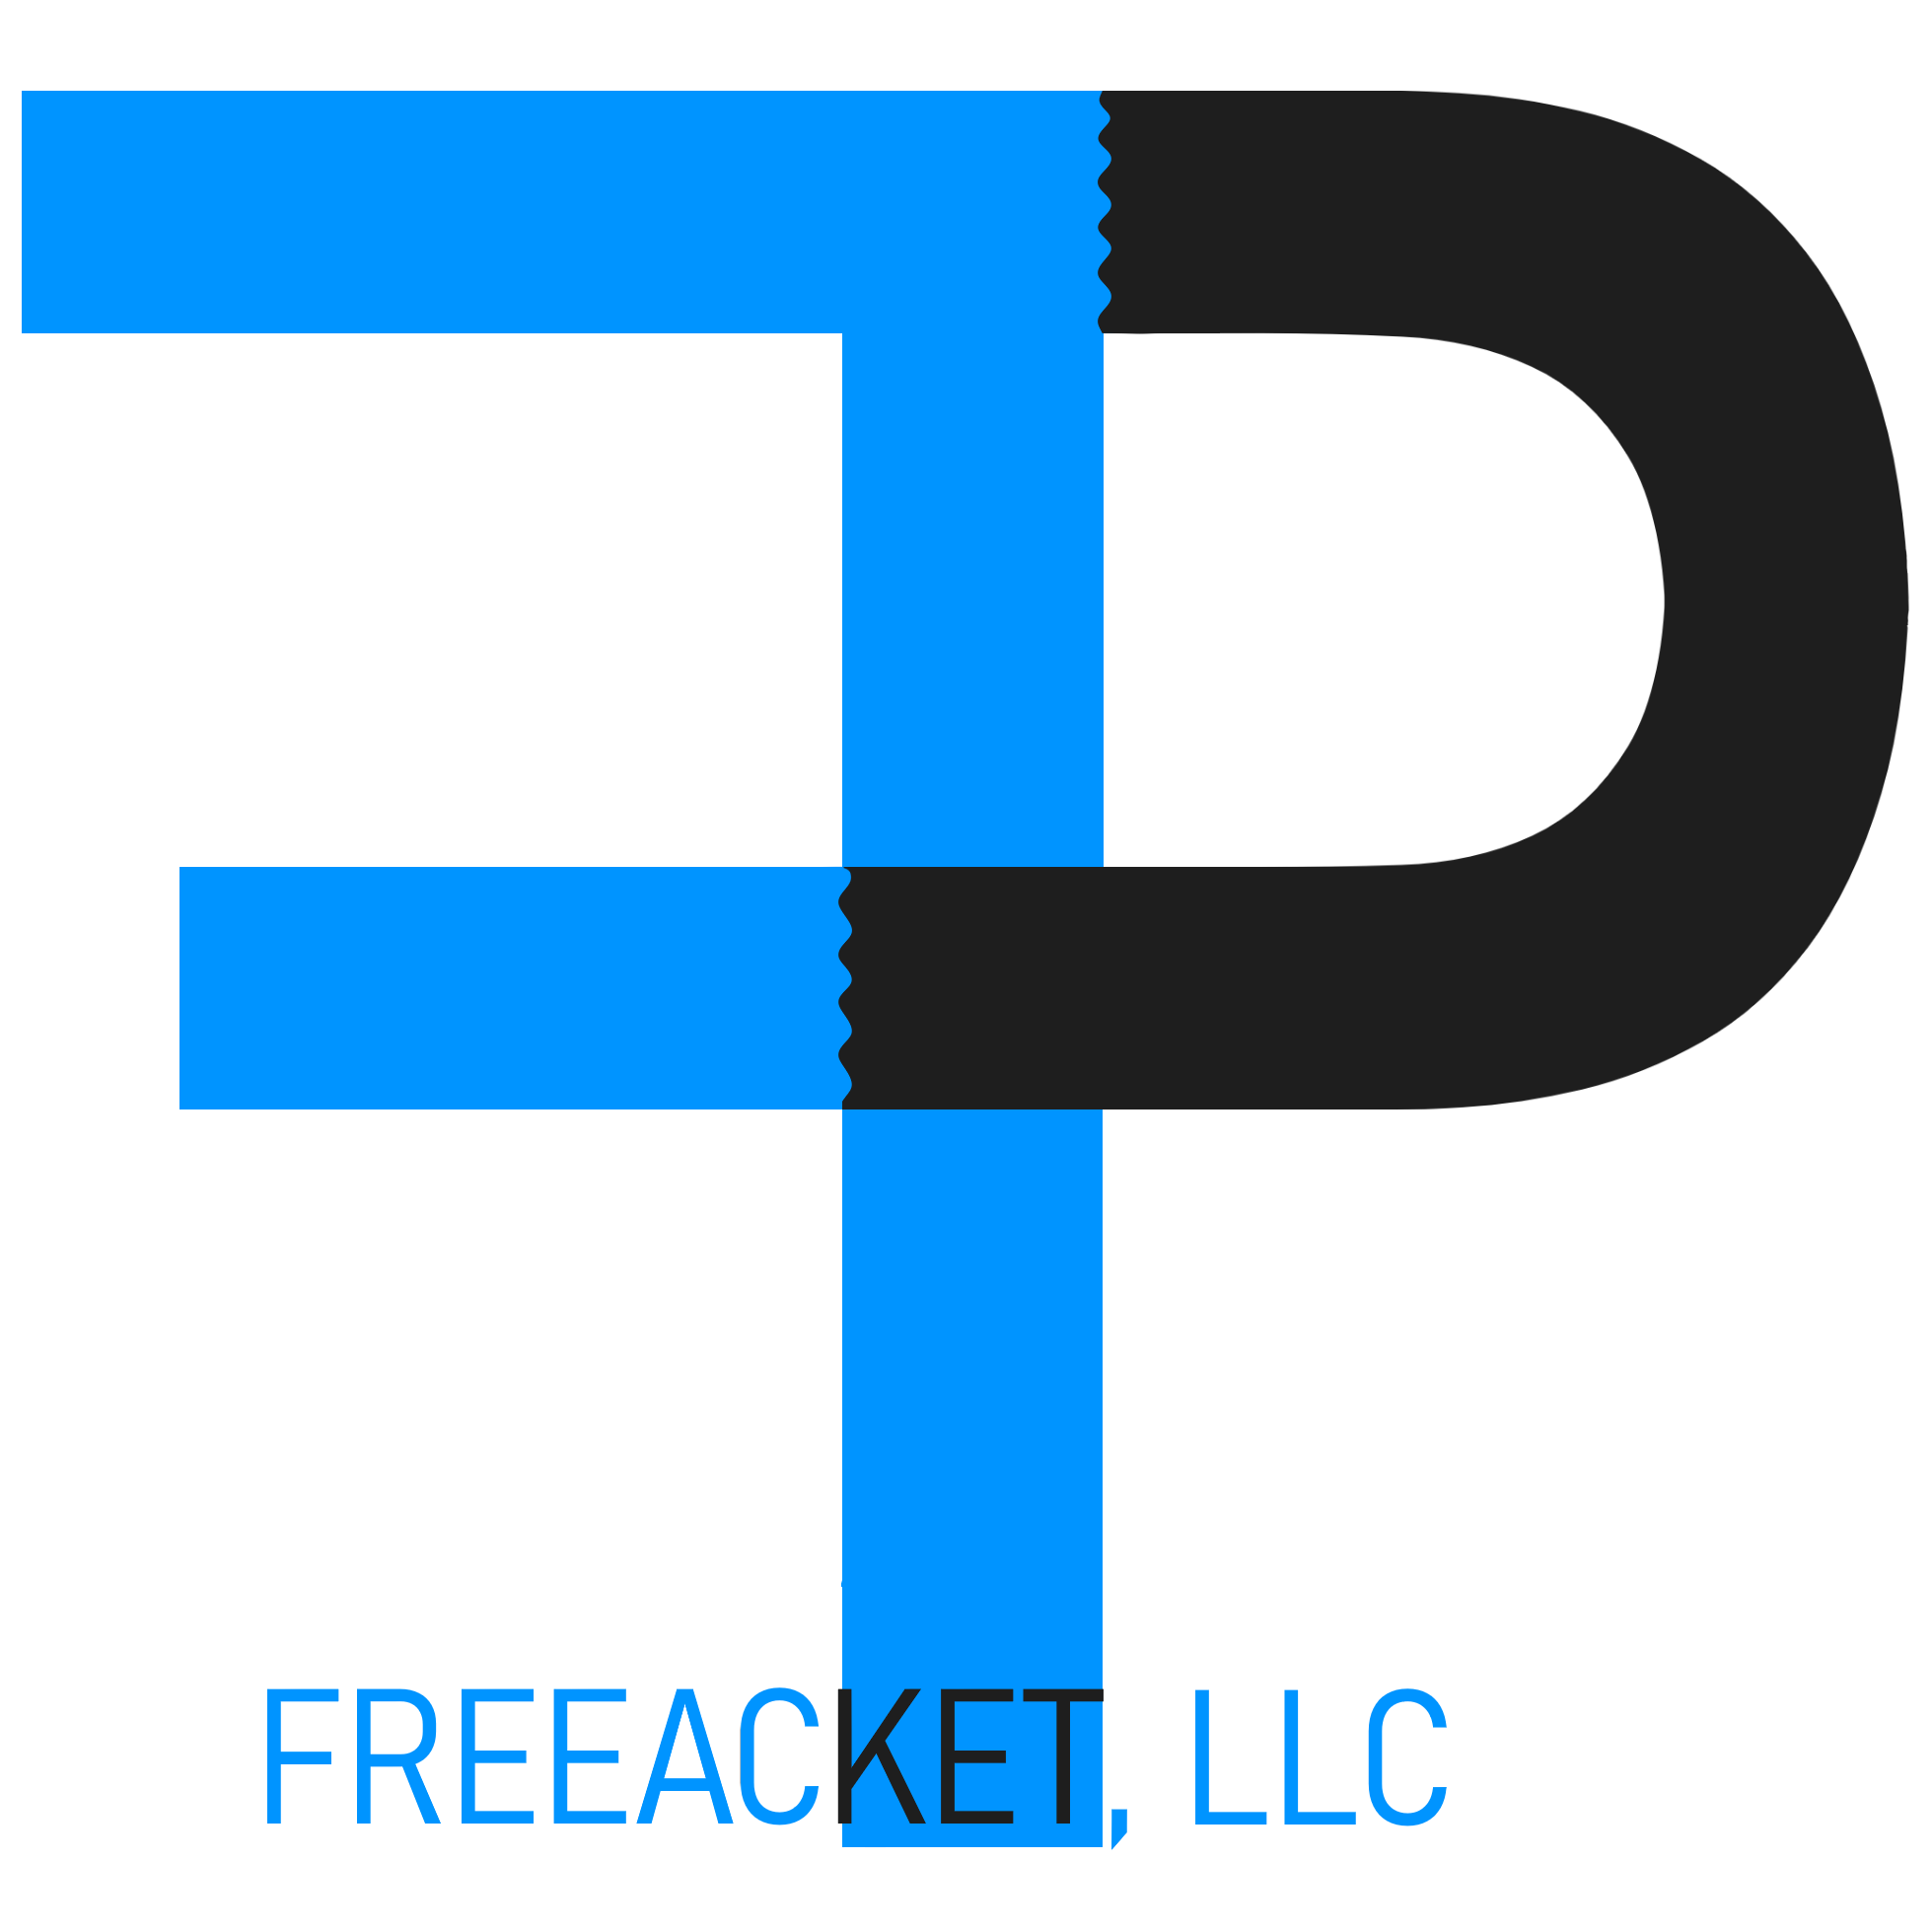 Free Packet LLC